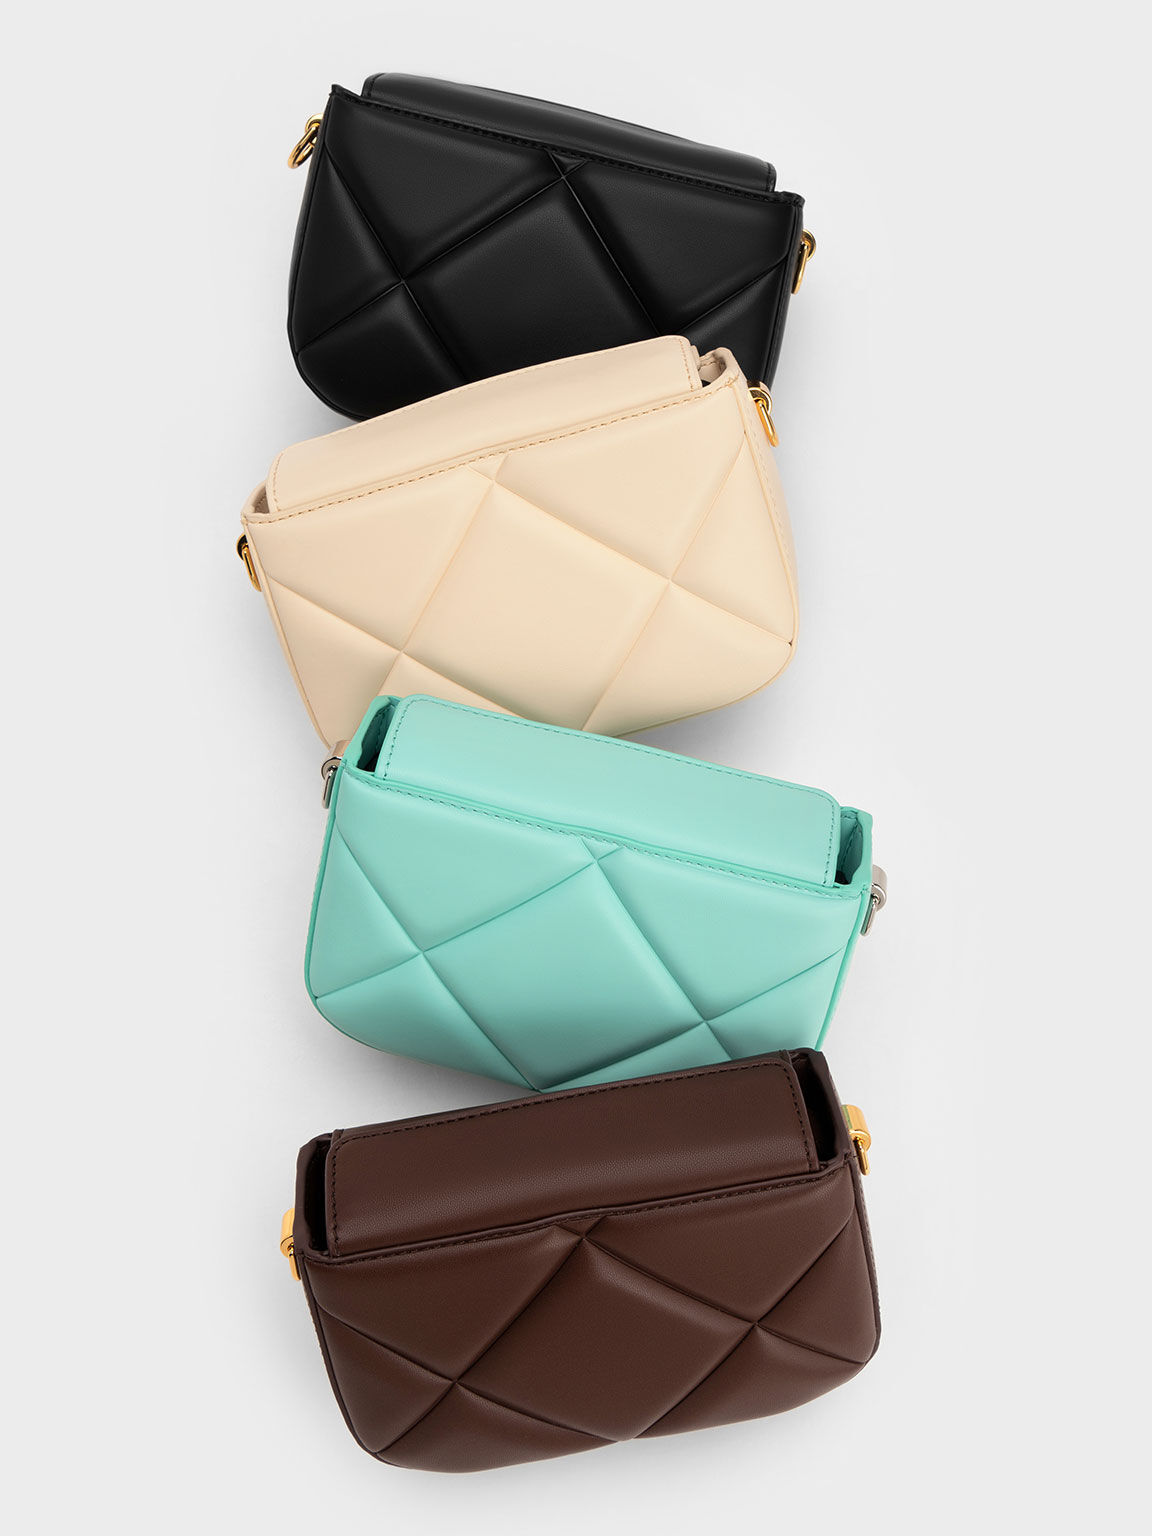 10 brands that offer luxury clutch bags designs in Jordan